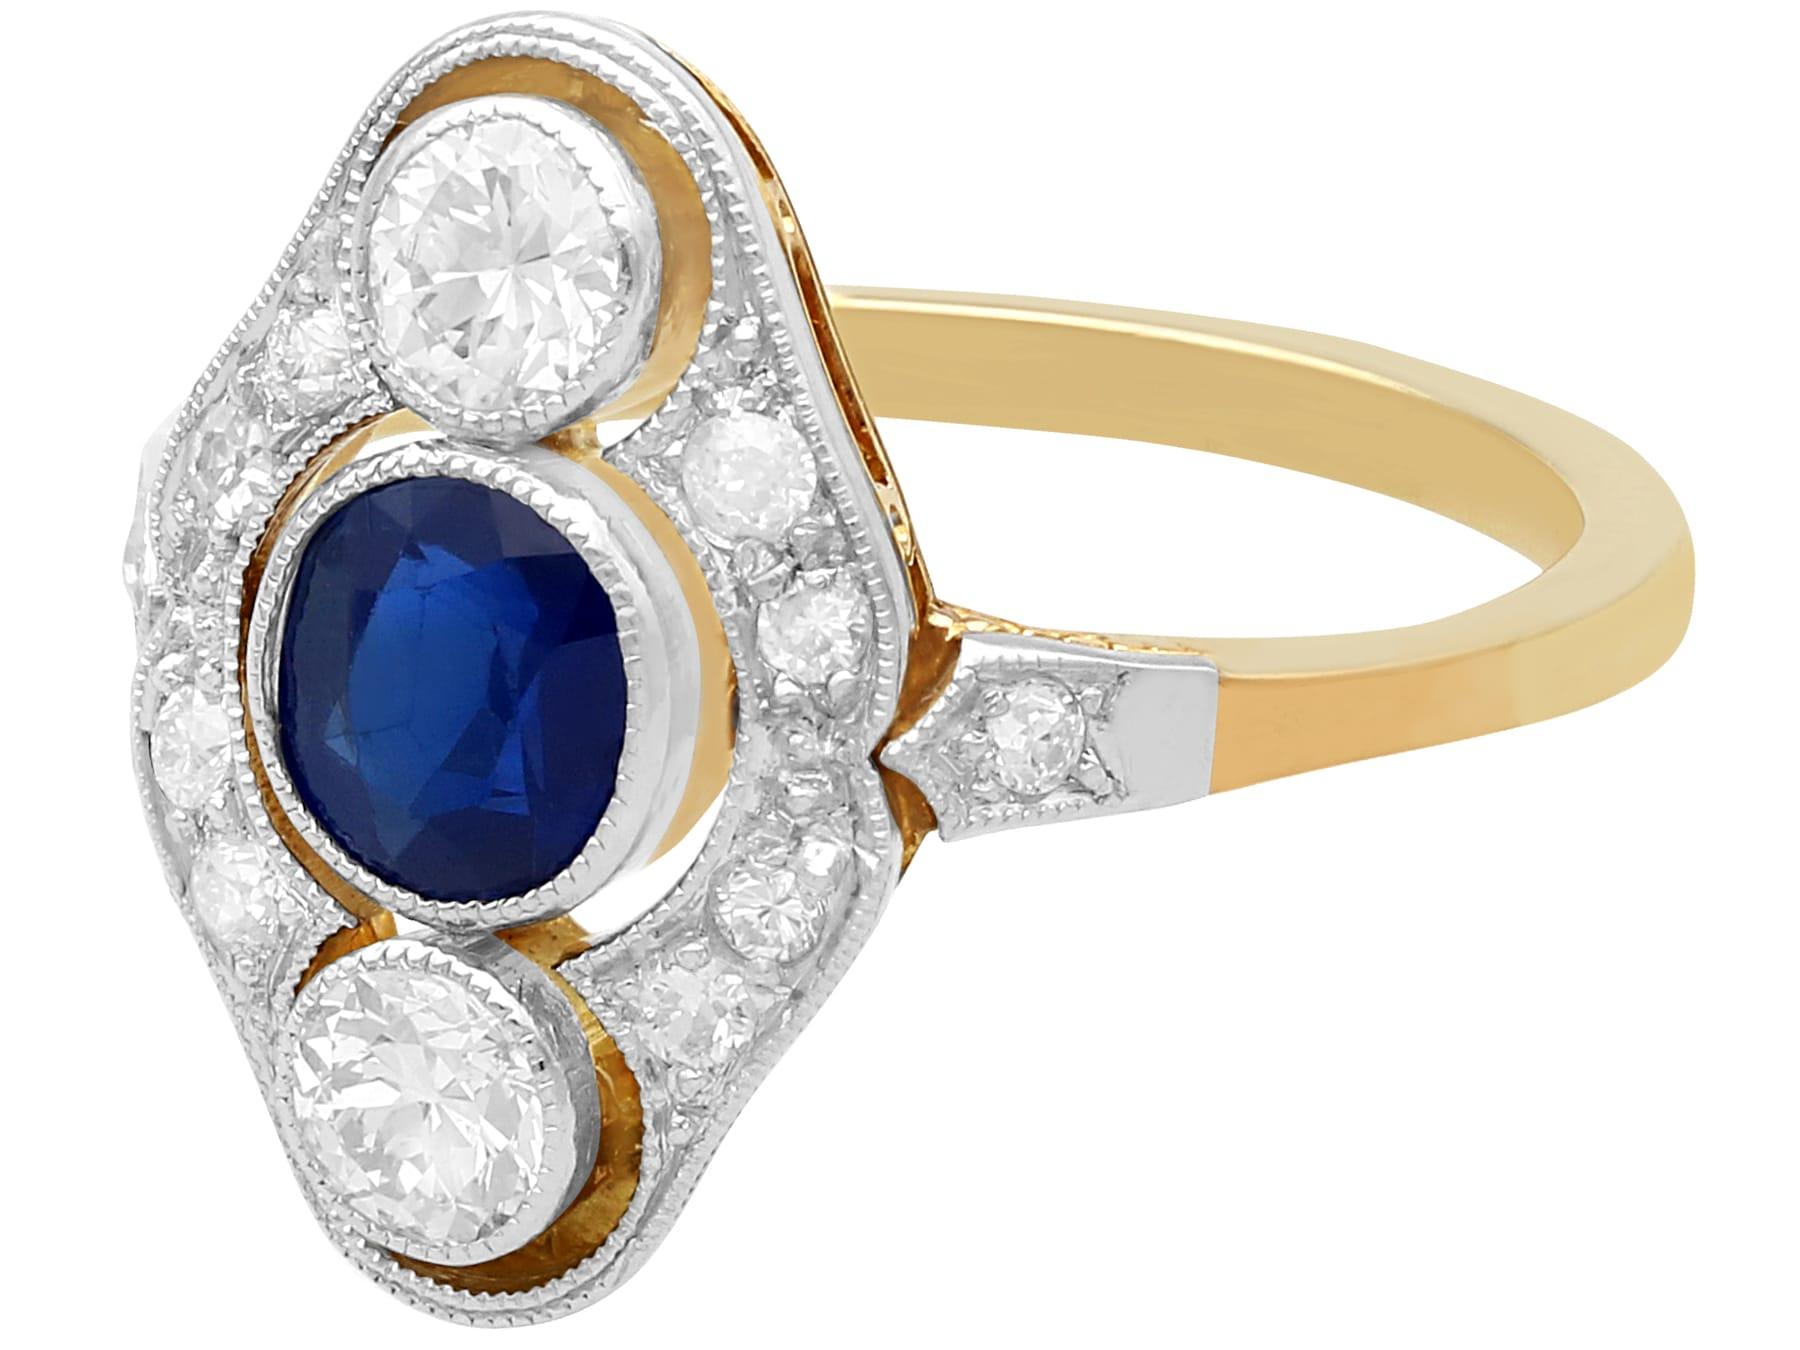 1940s sapphire and diamond ring